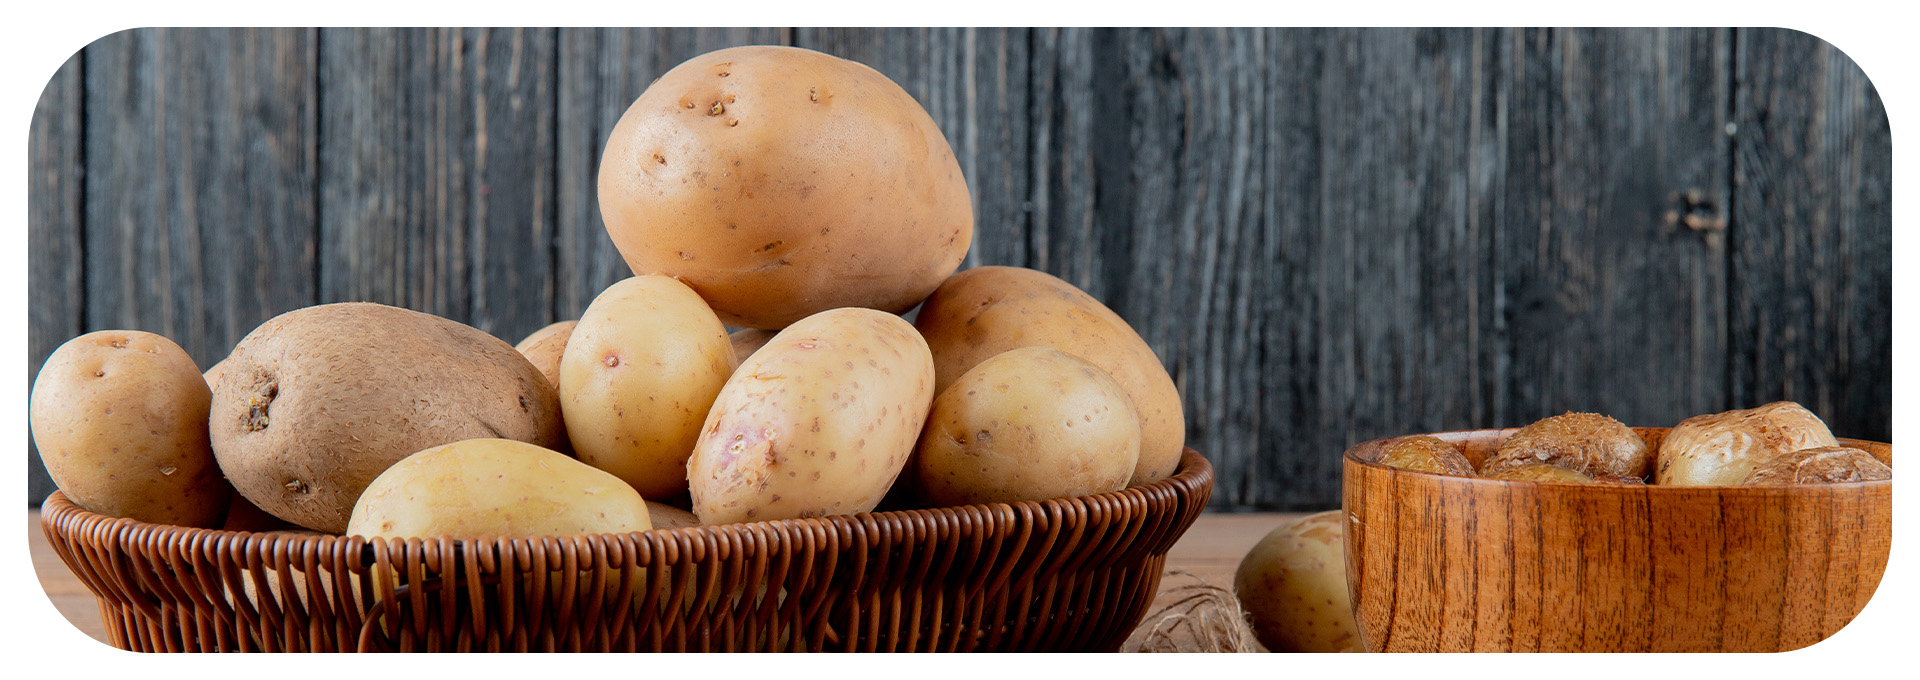 Photo of potatoes on a basket